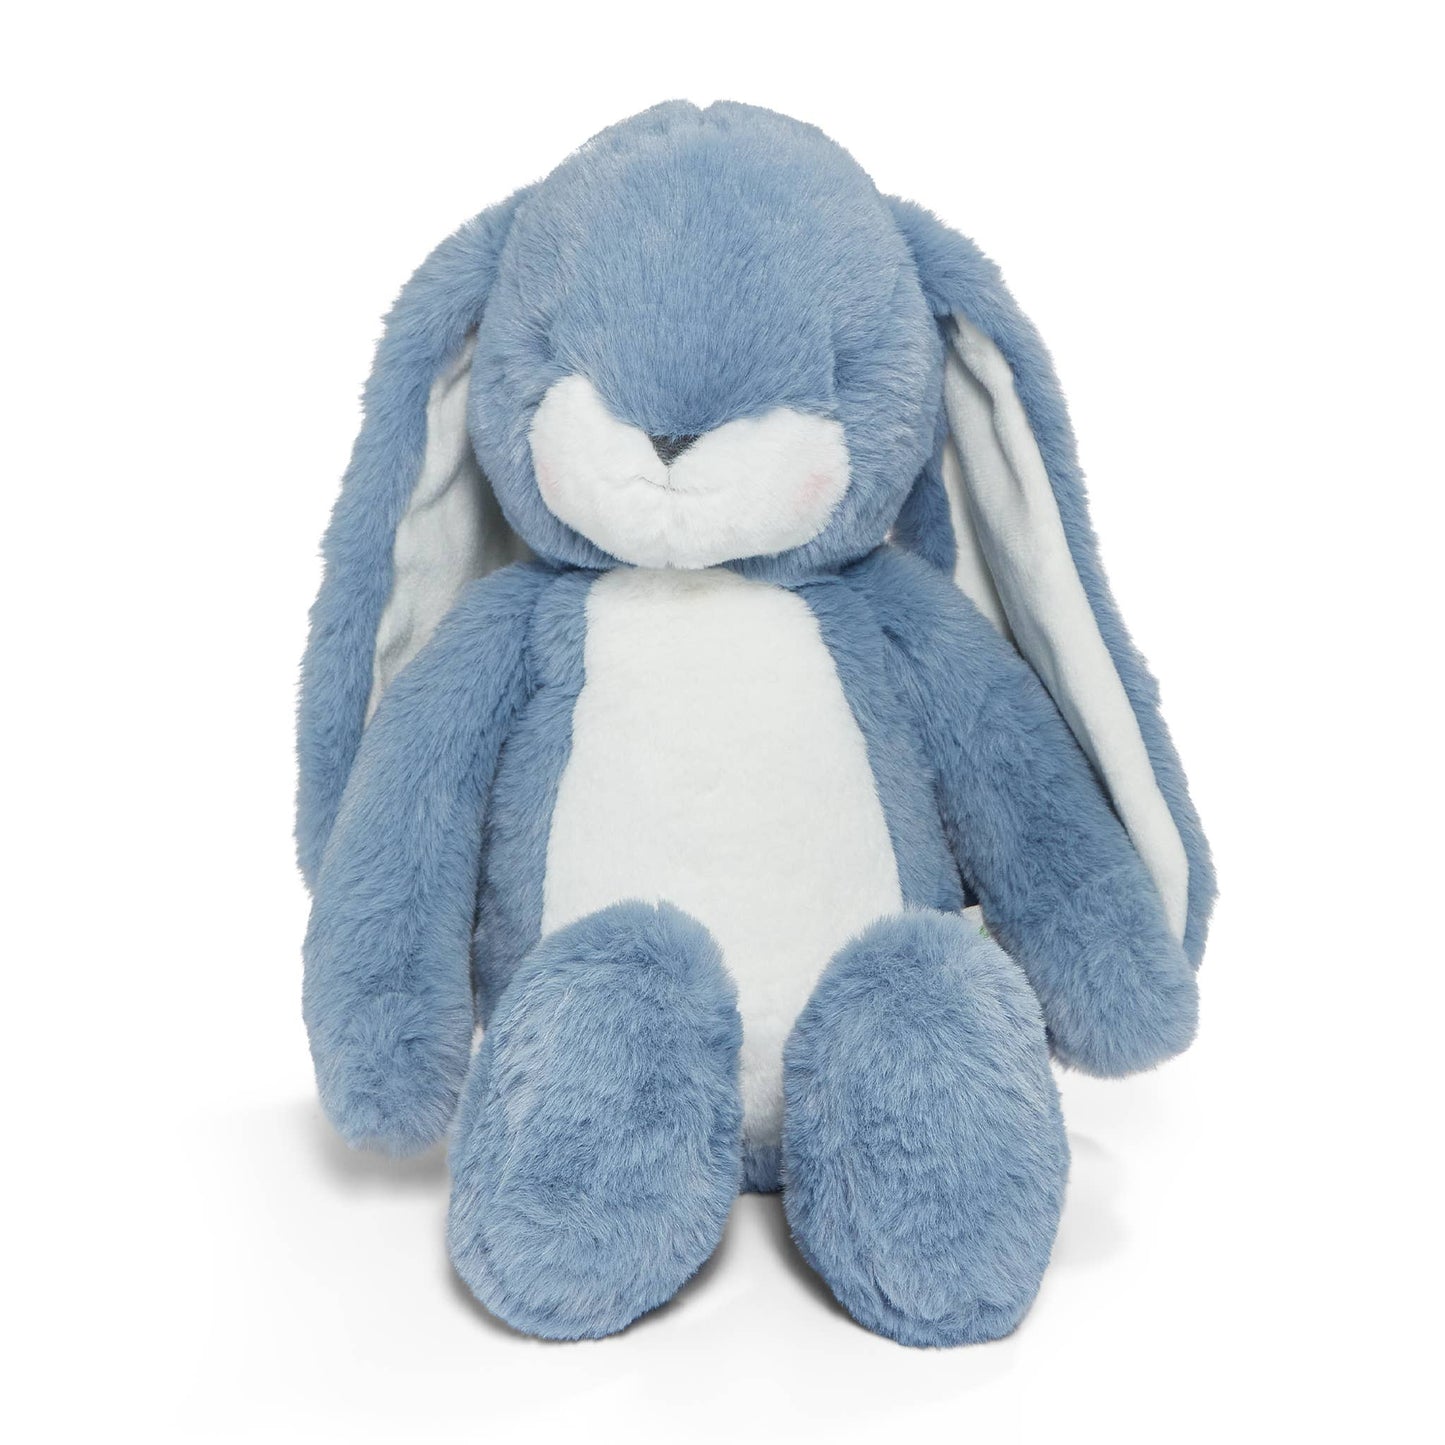 Sweet Nibble Floppy Bunny - Blue (Lavender Lustre)